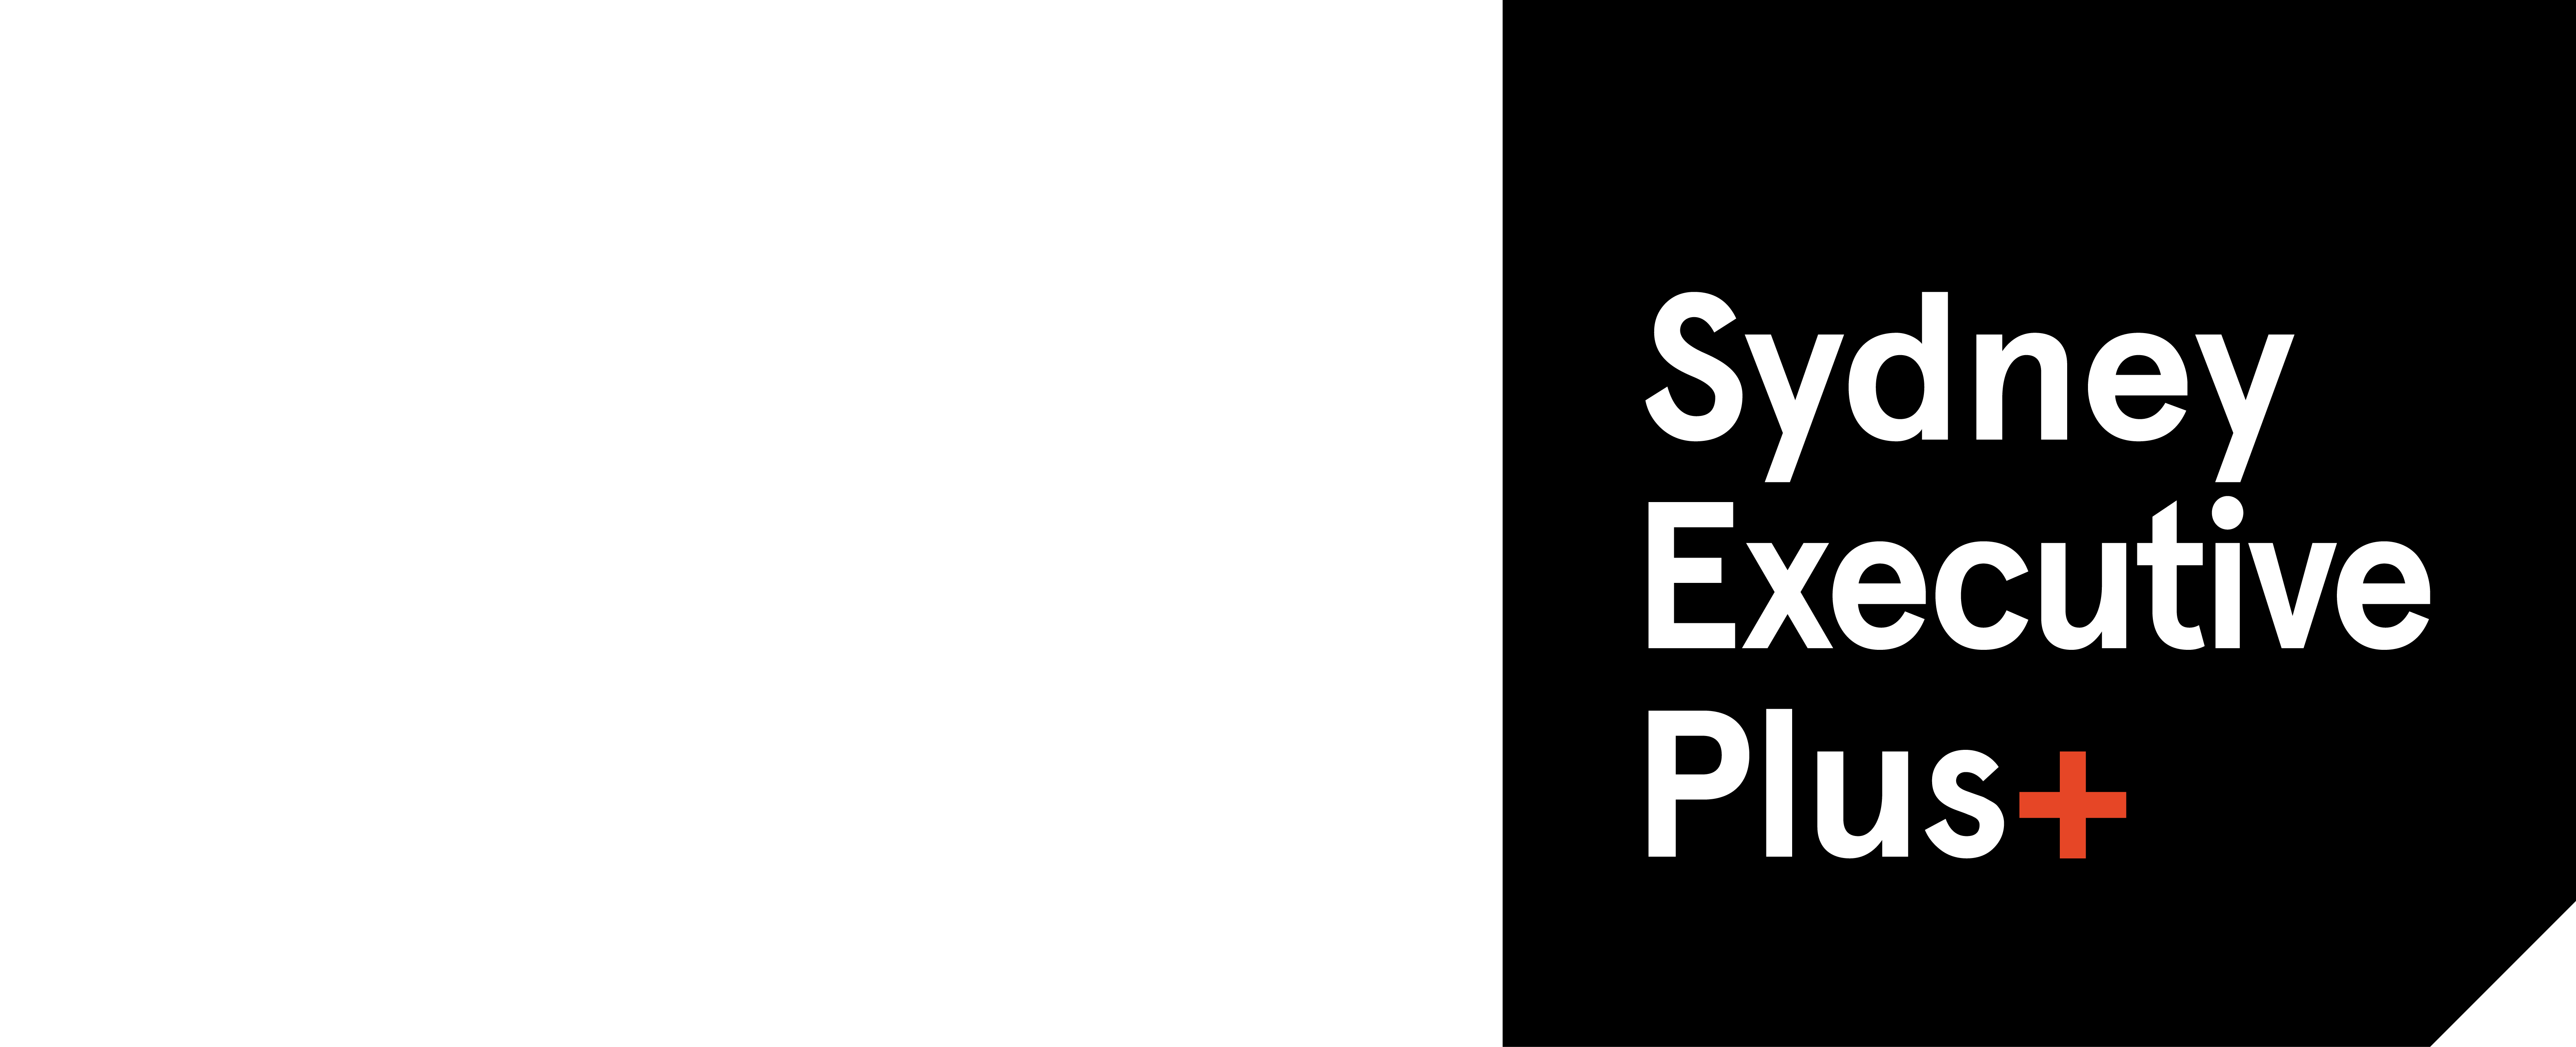 Sydney Executive Plus